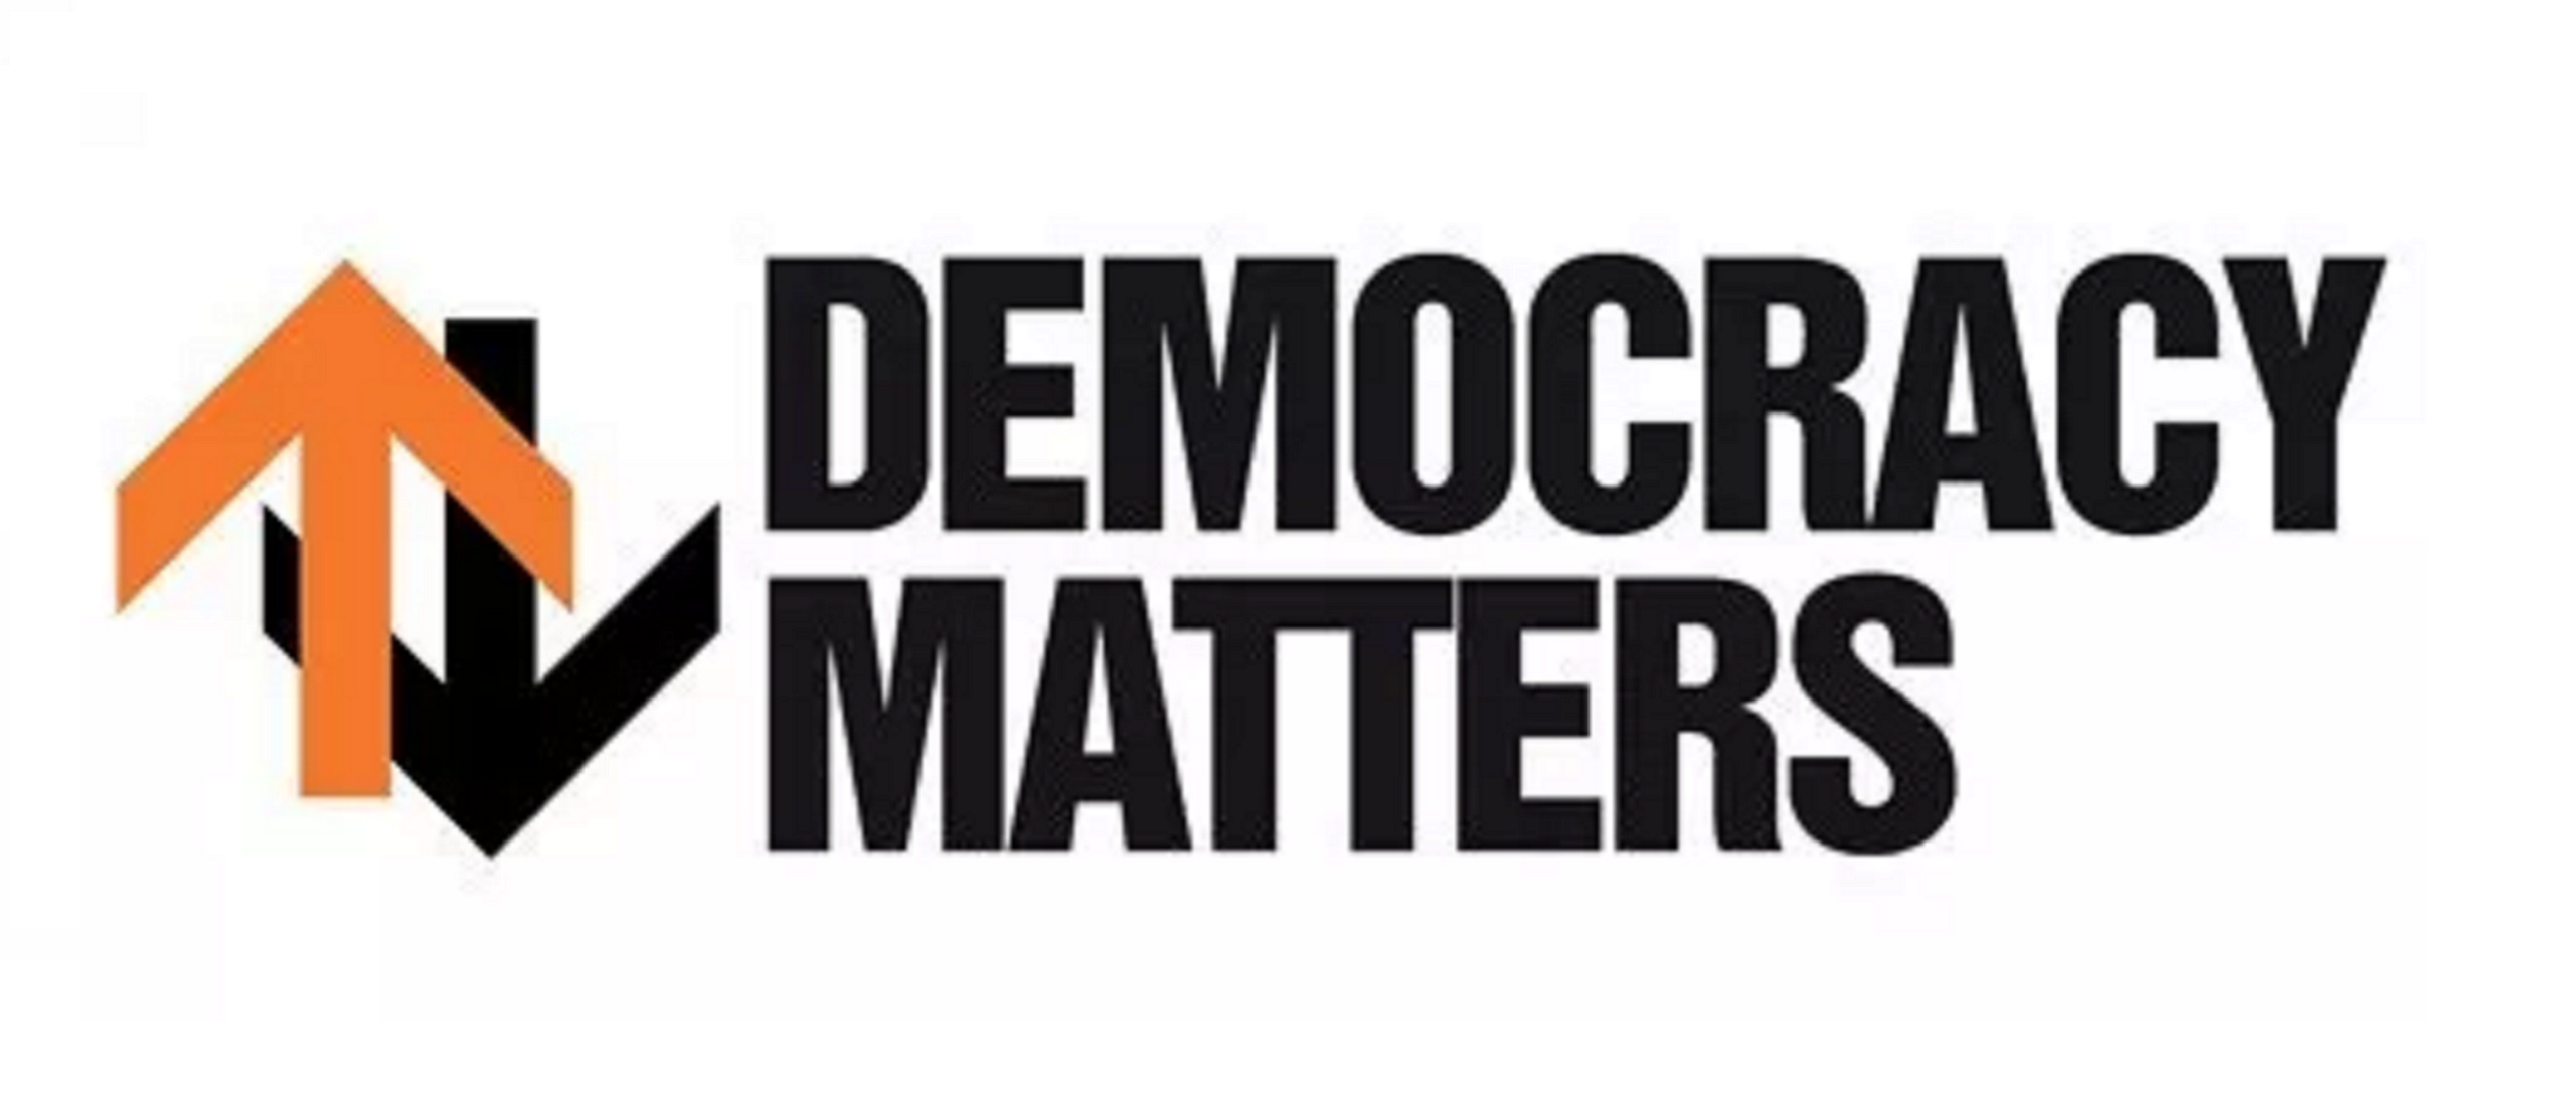 Democracy matters logo 3000x1300